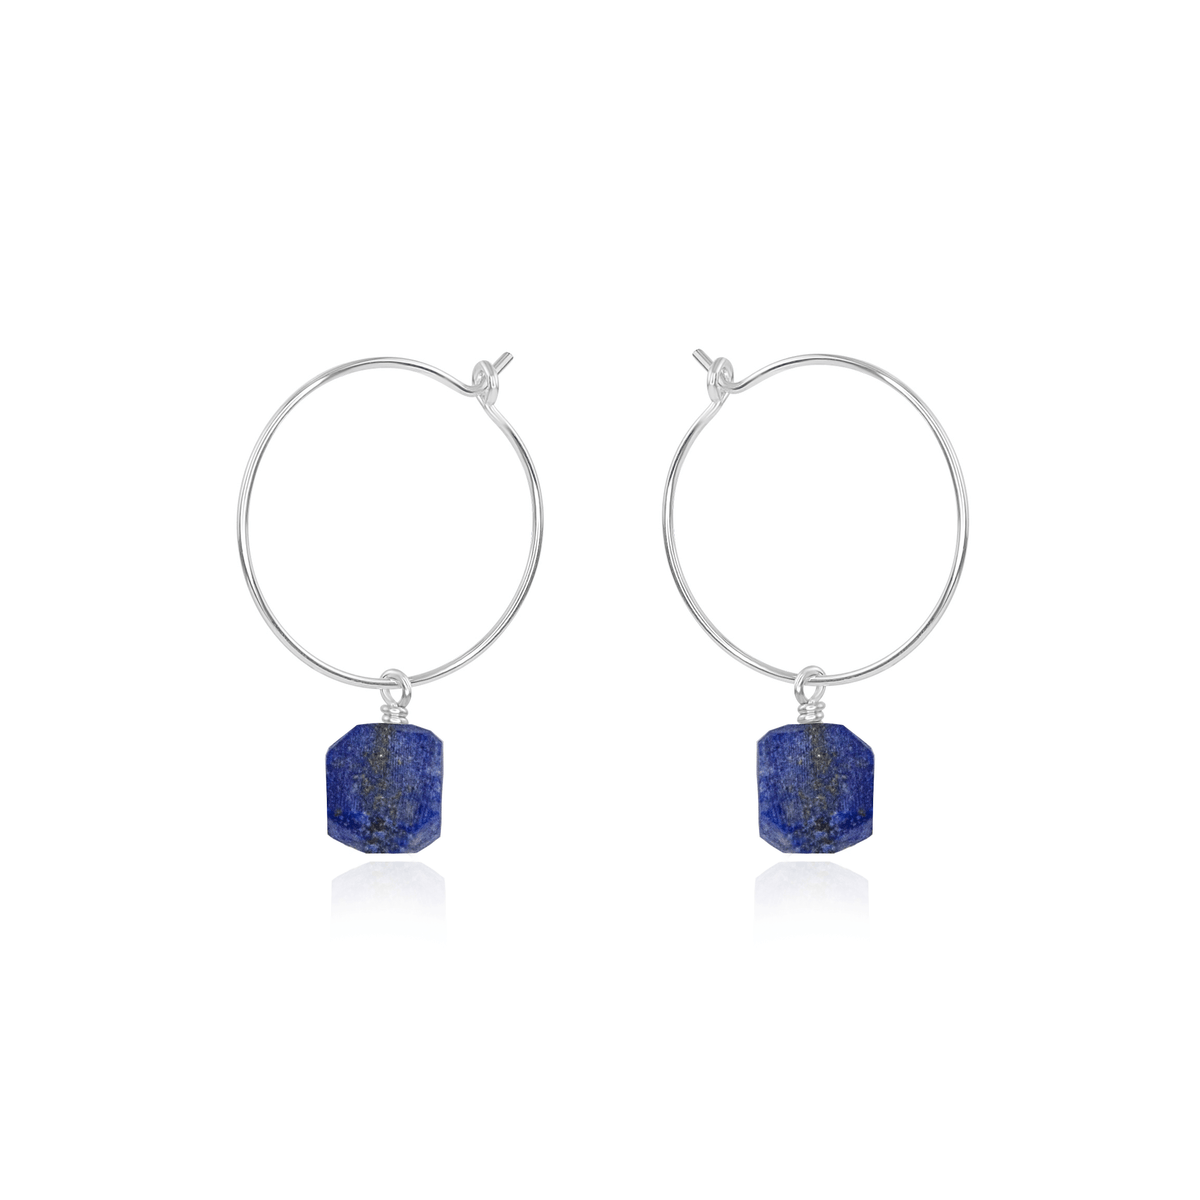 Raw Lapis Lazuli Gemstone Dangle Hoop Earrings - Raw Lapis Lazuli Gemstone Dangle Hoop Earrings - Sterling Silver - Luna Tide Handmade Crystal Jewellery